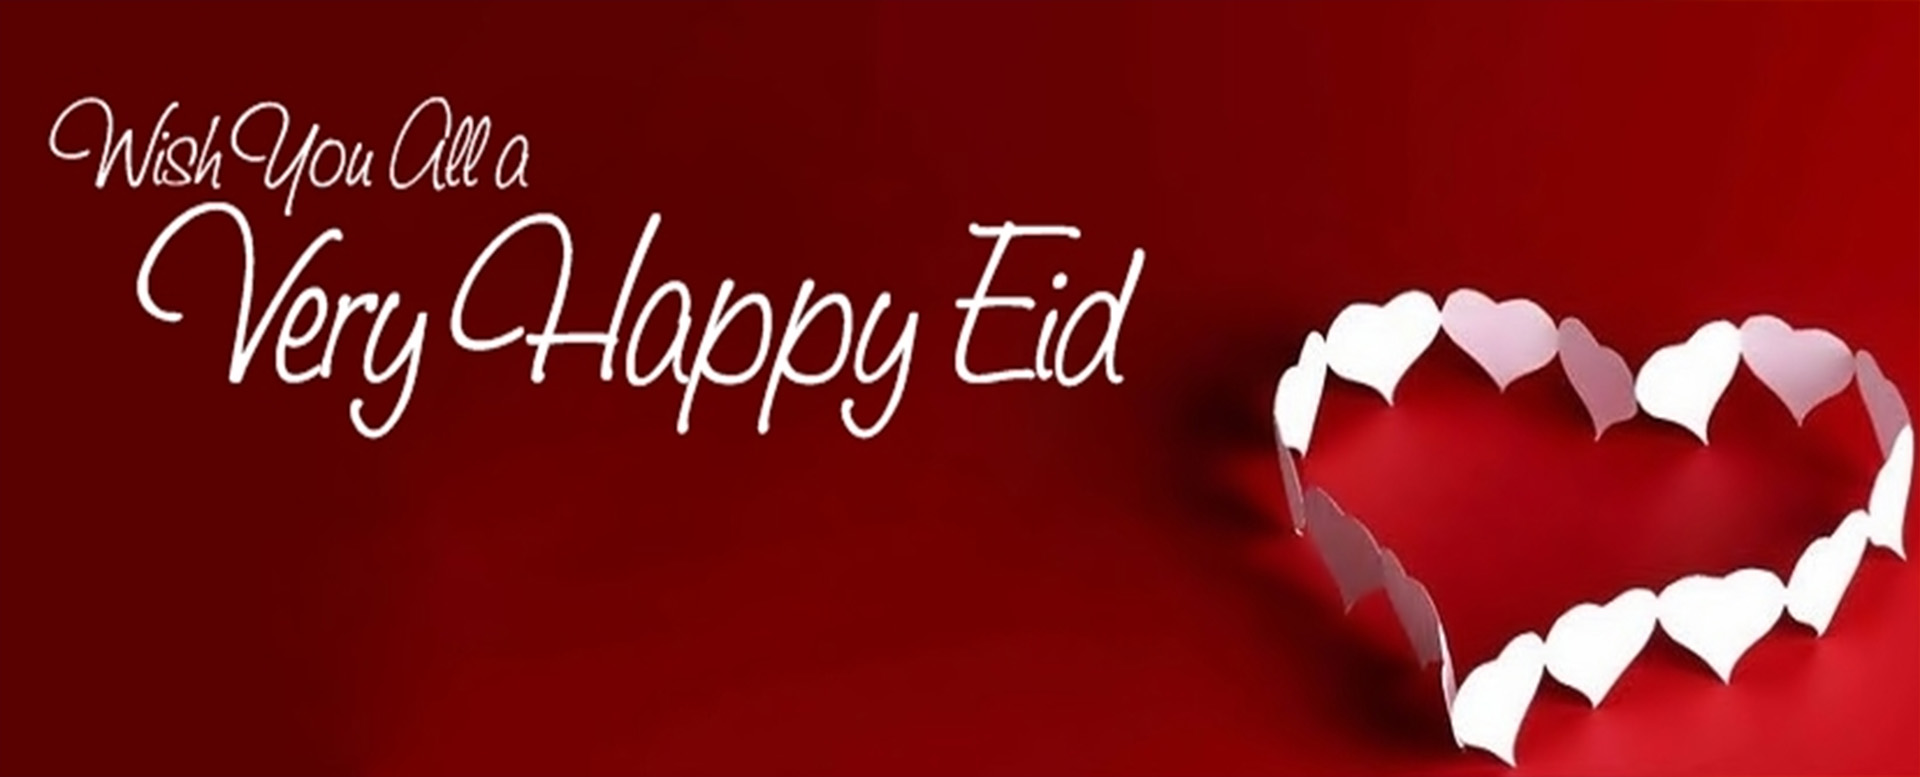 eid wishes 2018